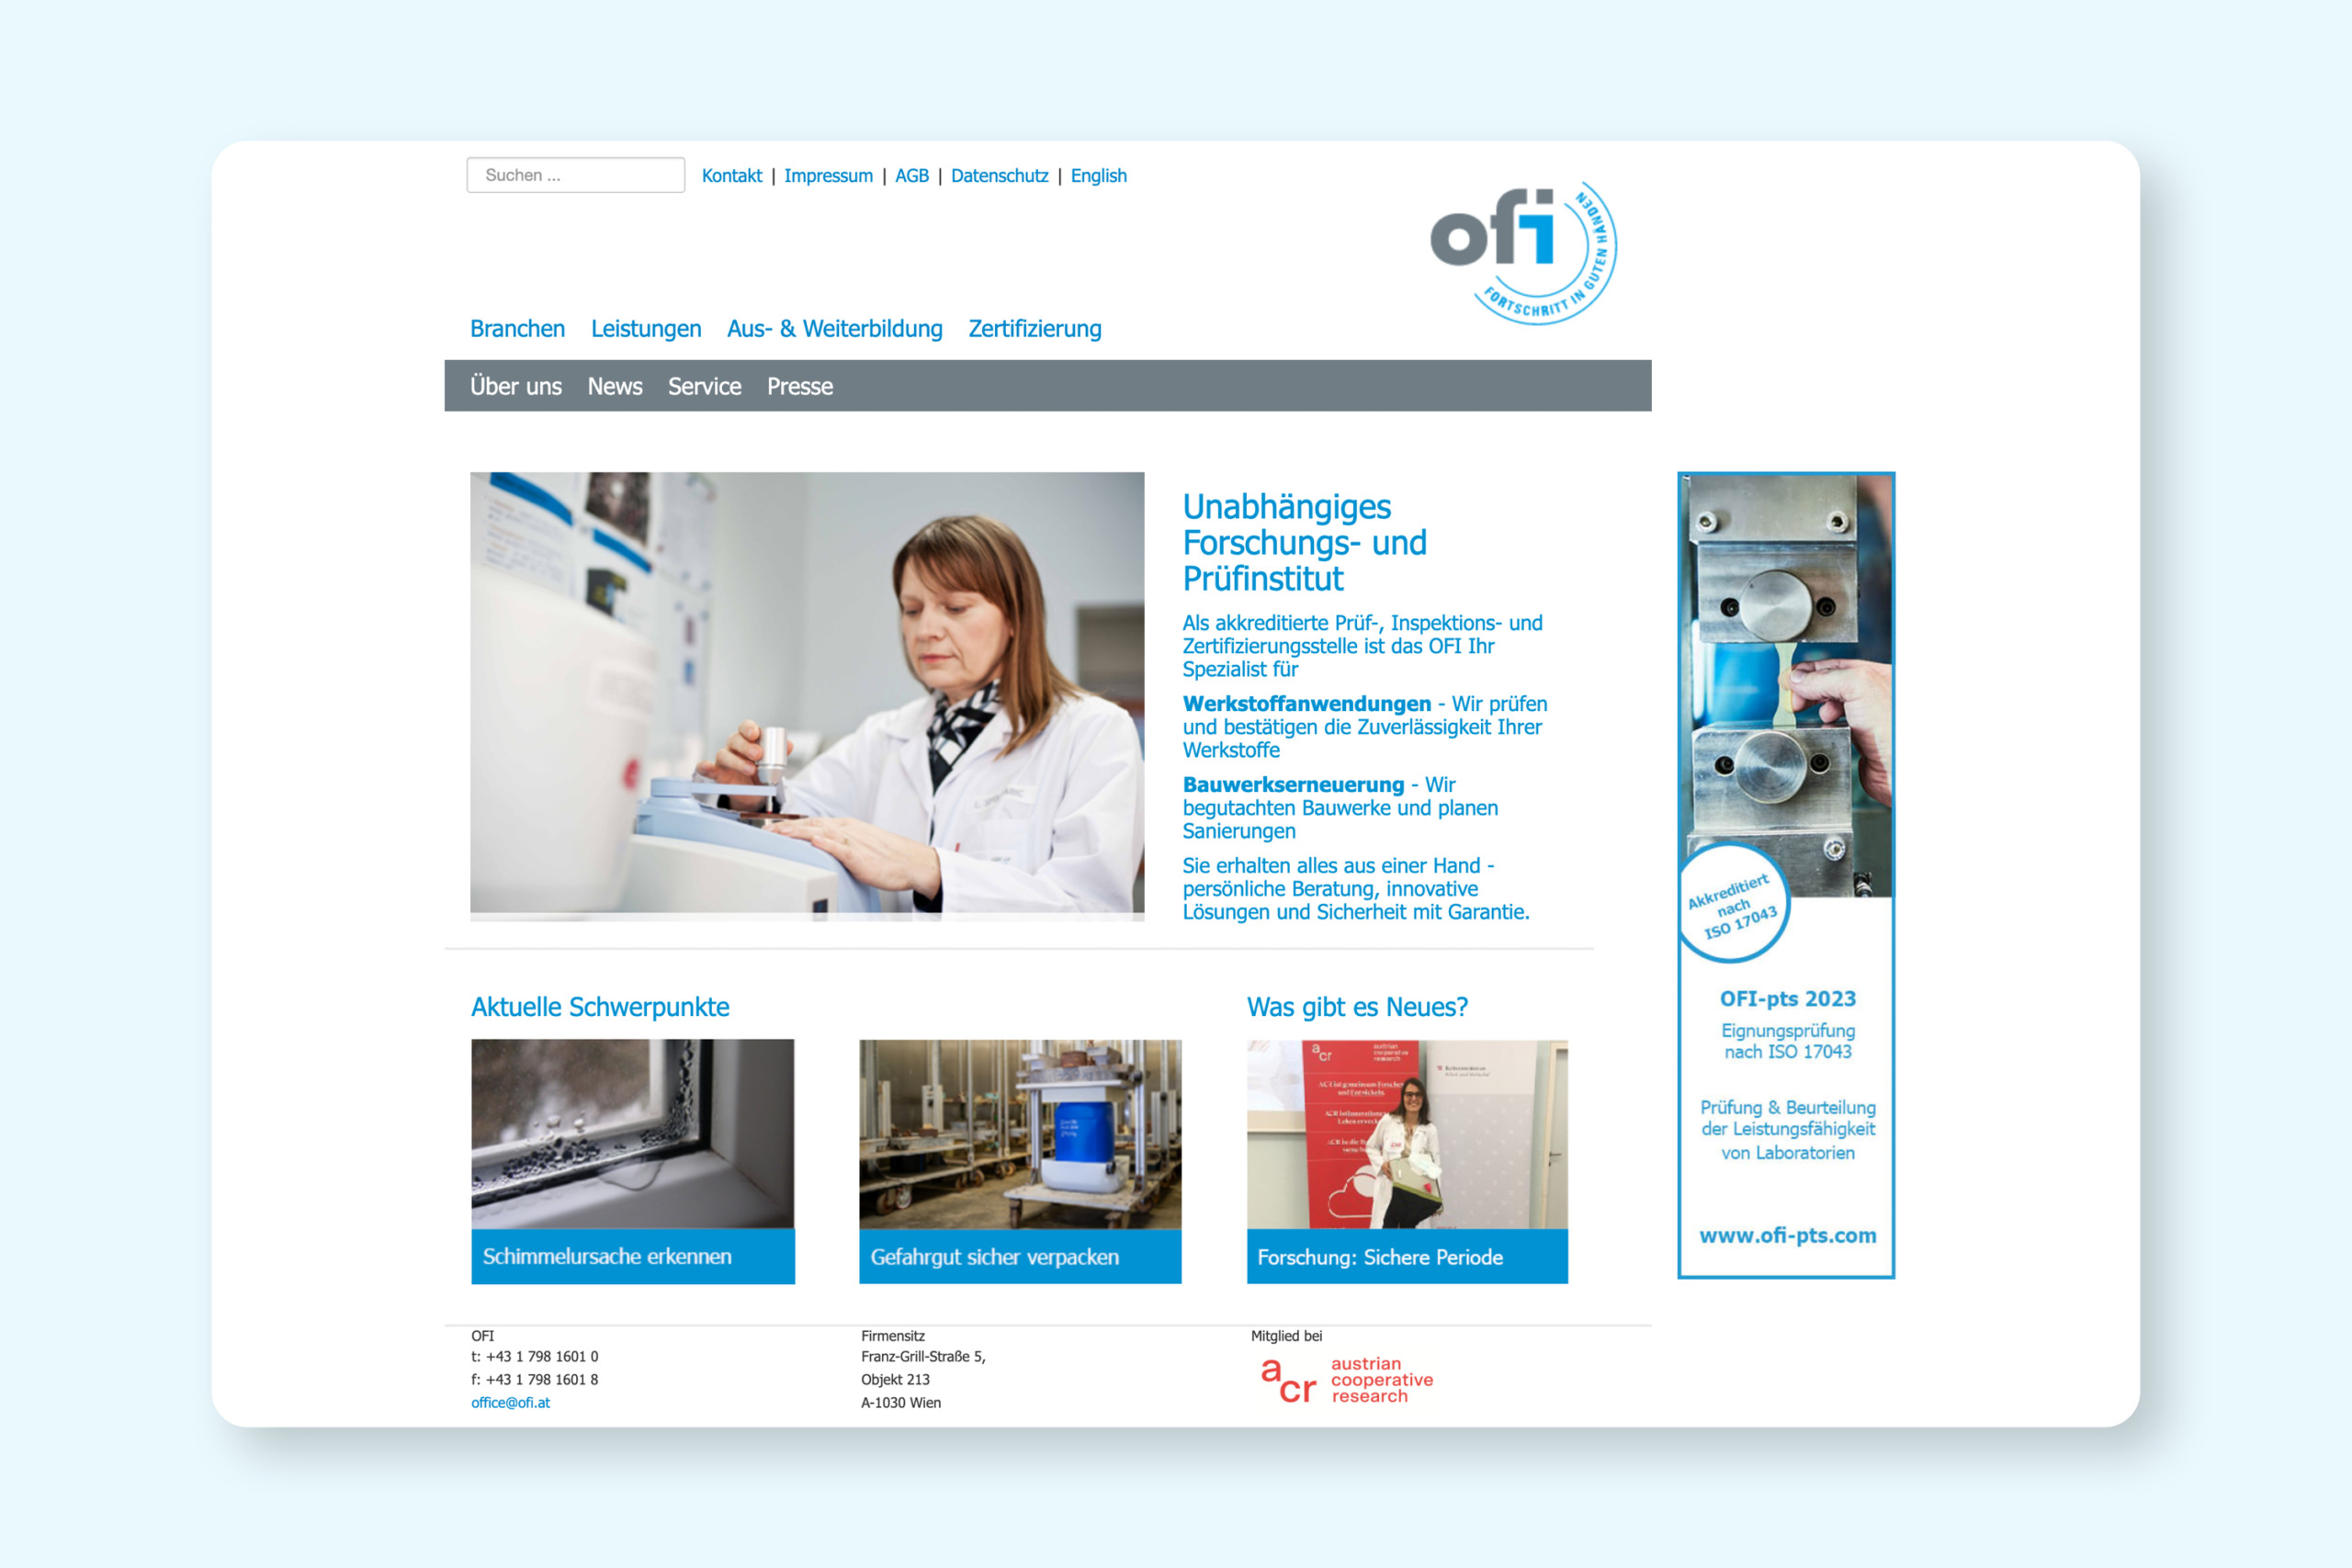 The OFI website homepage.